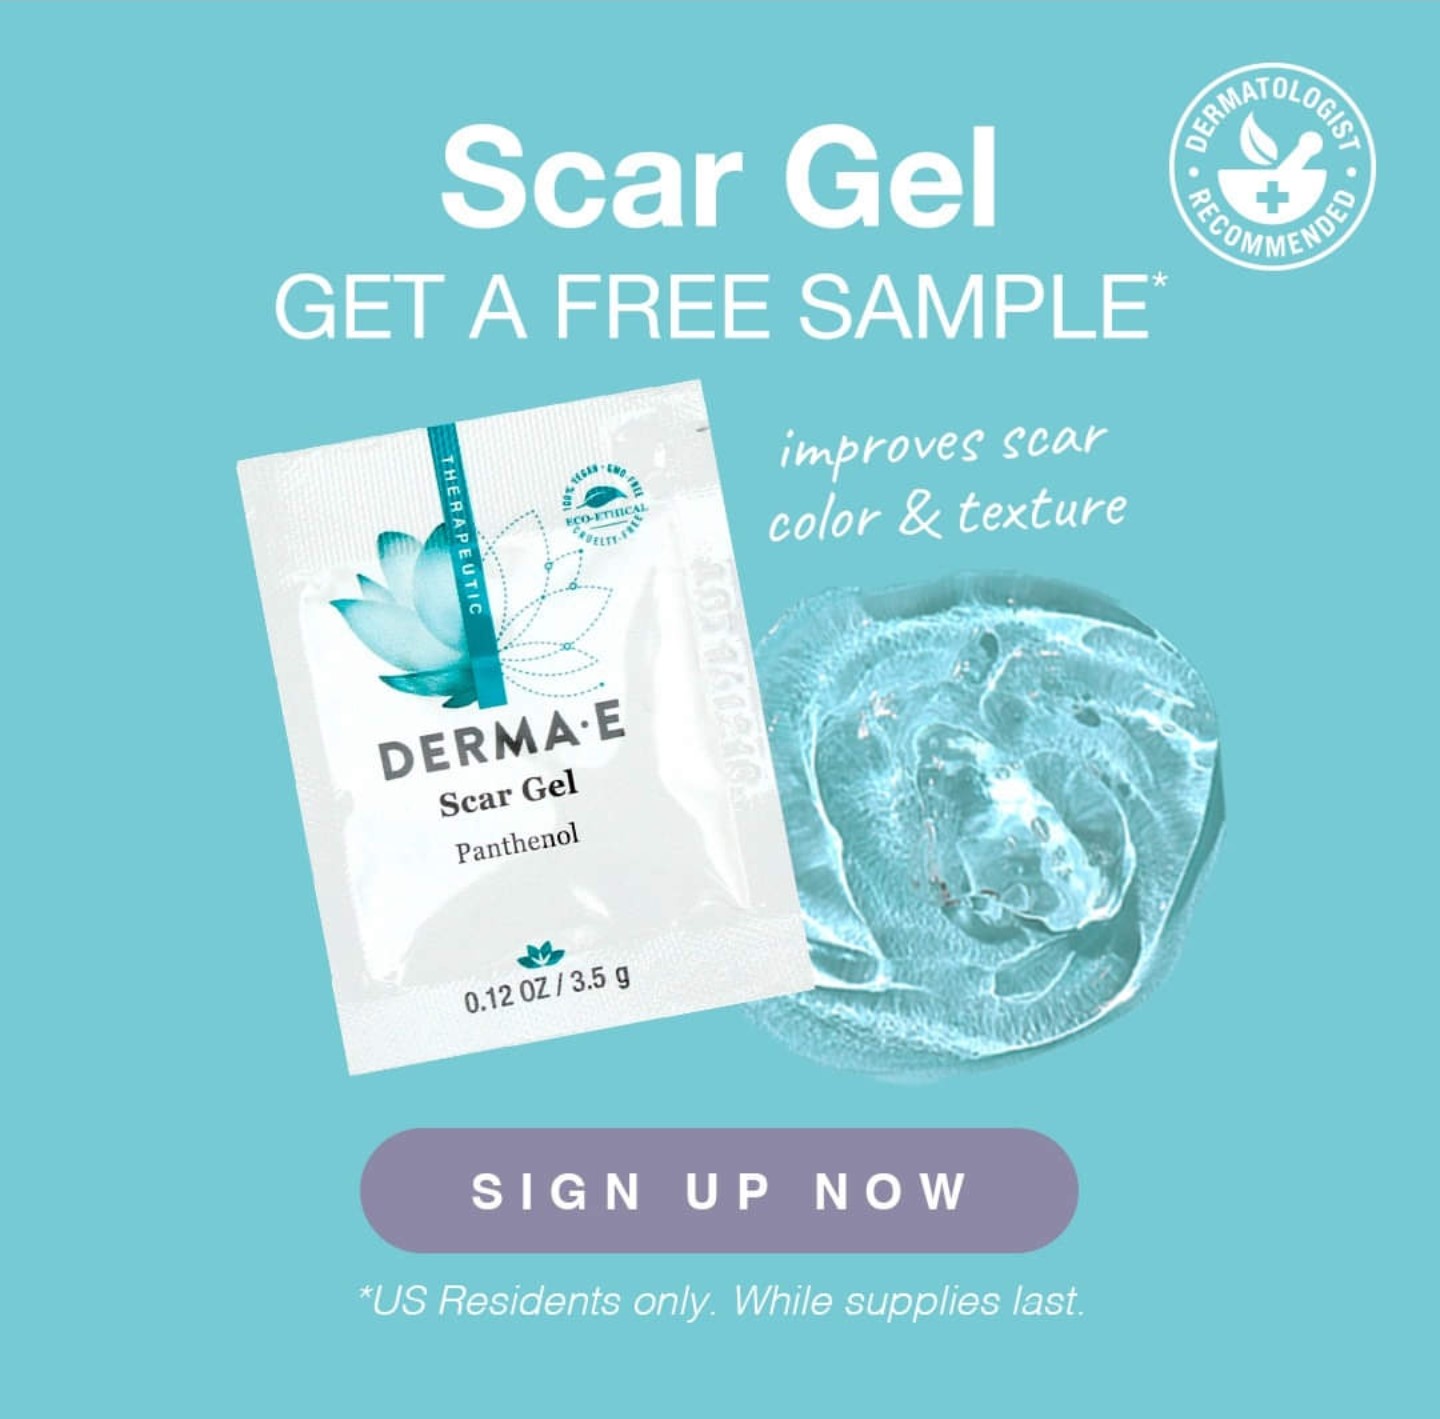 Free Sample of Derma E Scar Gel (First 4,000)